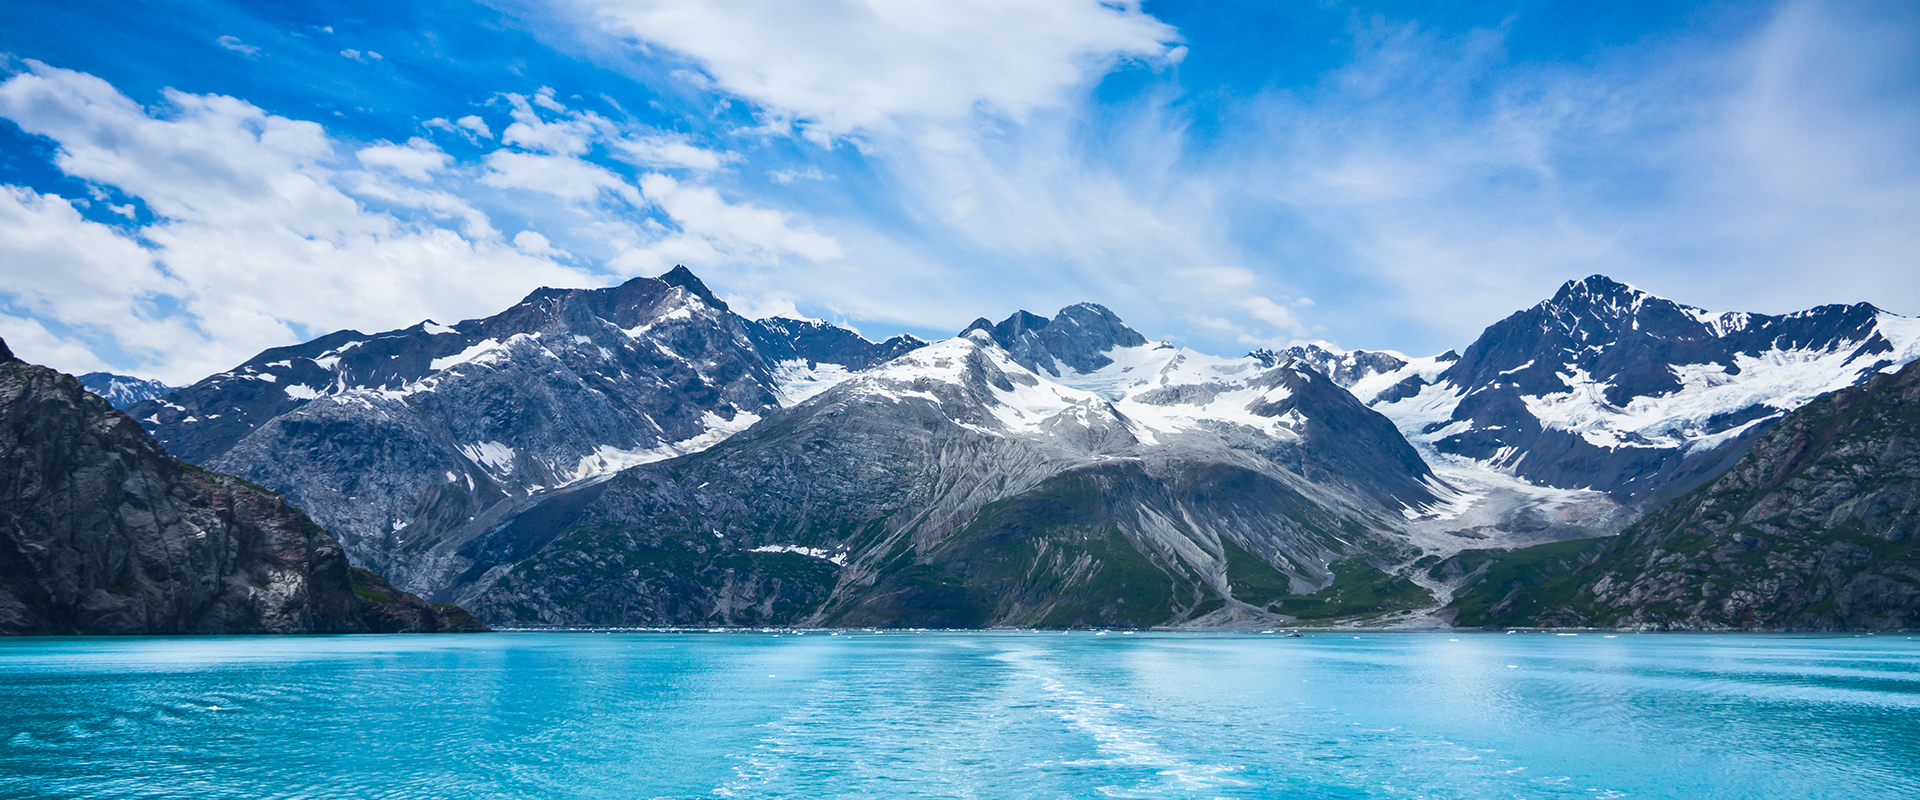 Glacier Bay view from the water towards white glacier, Alaska